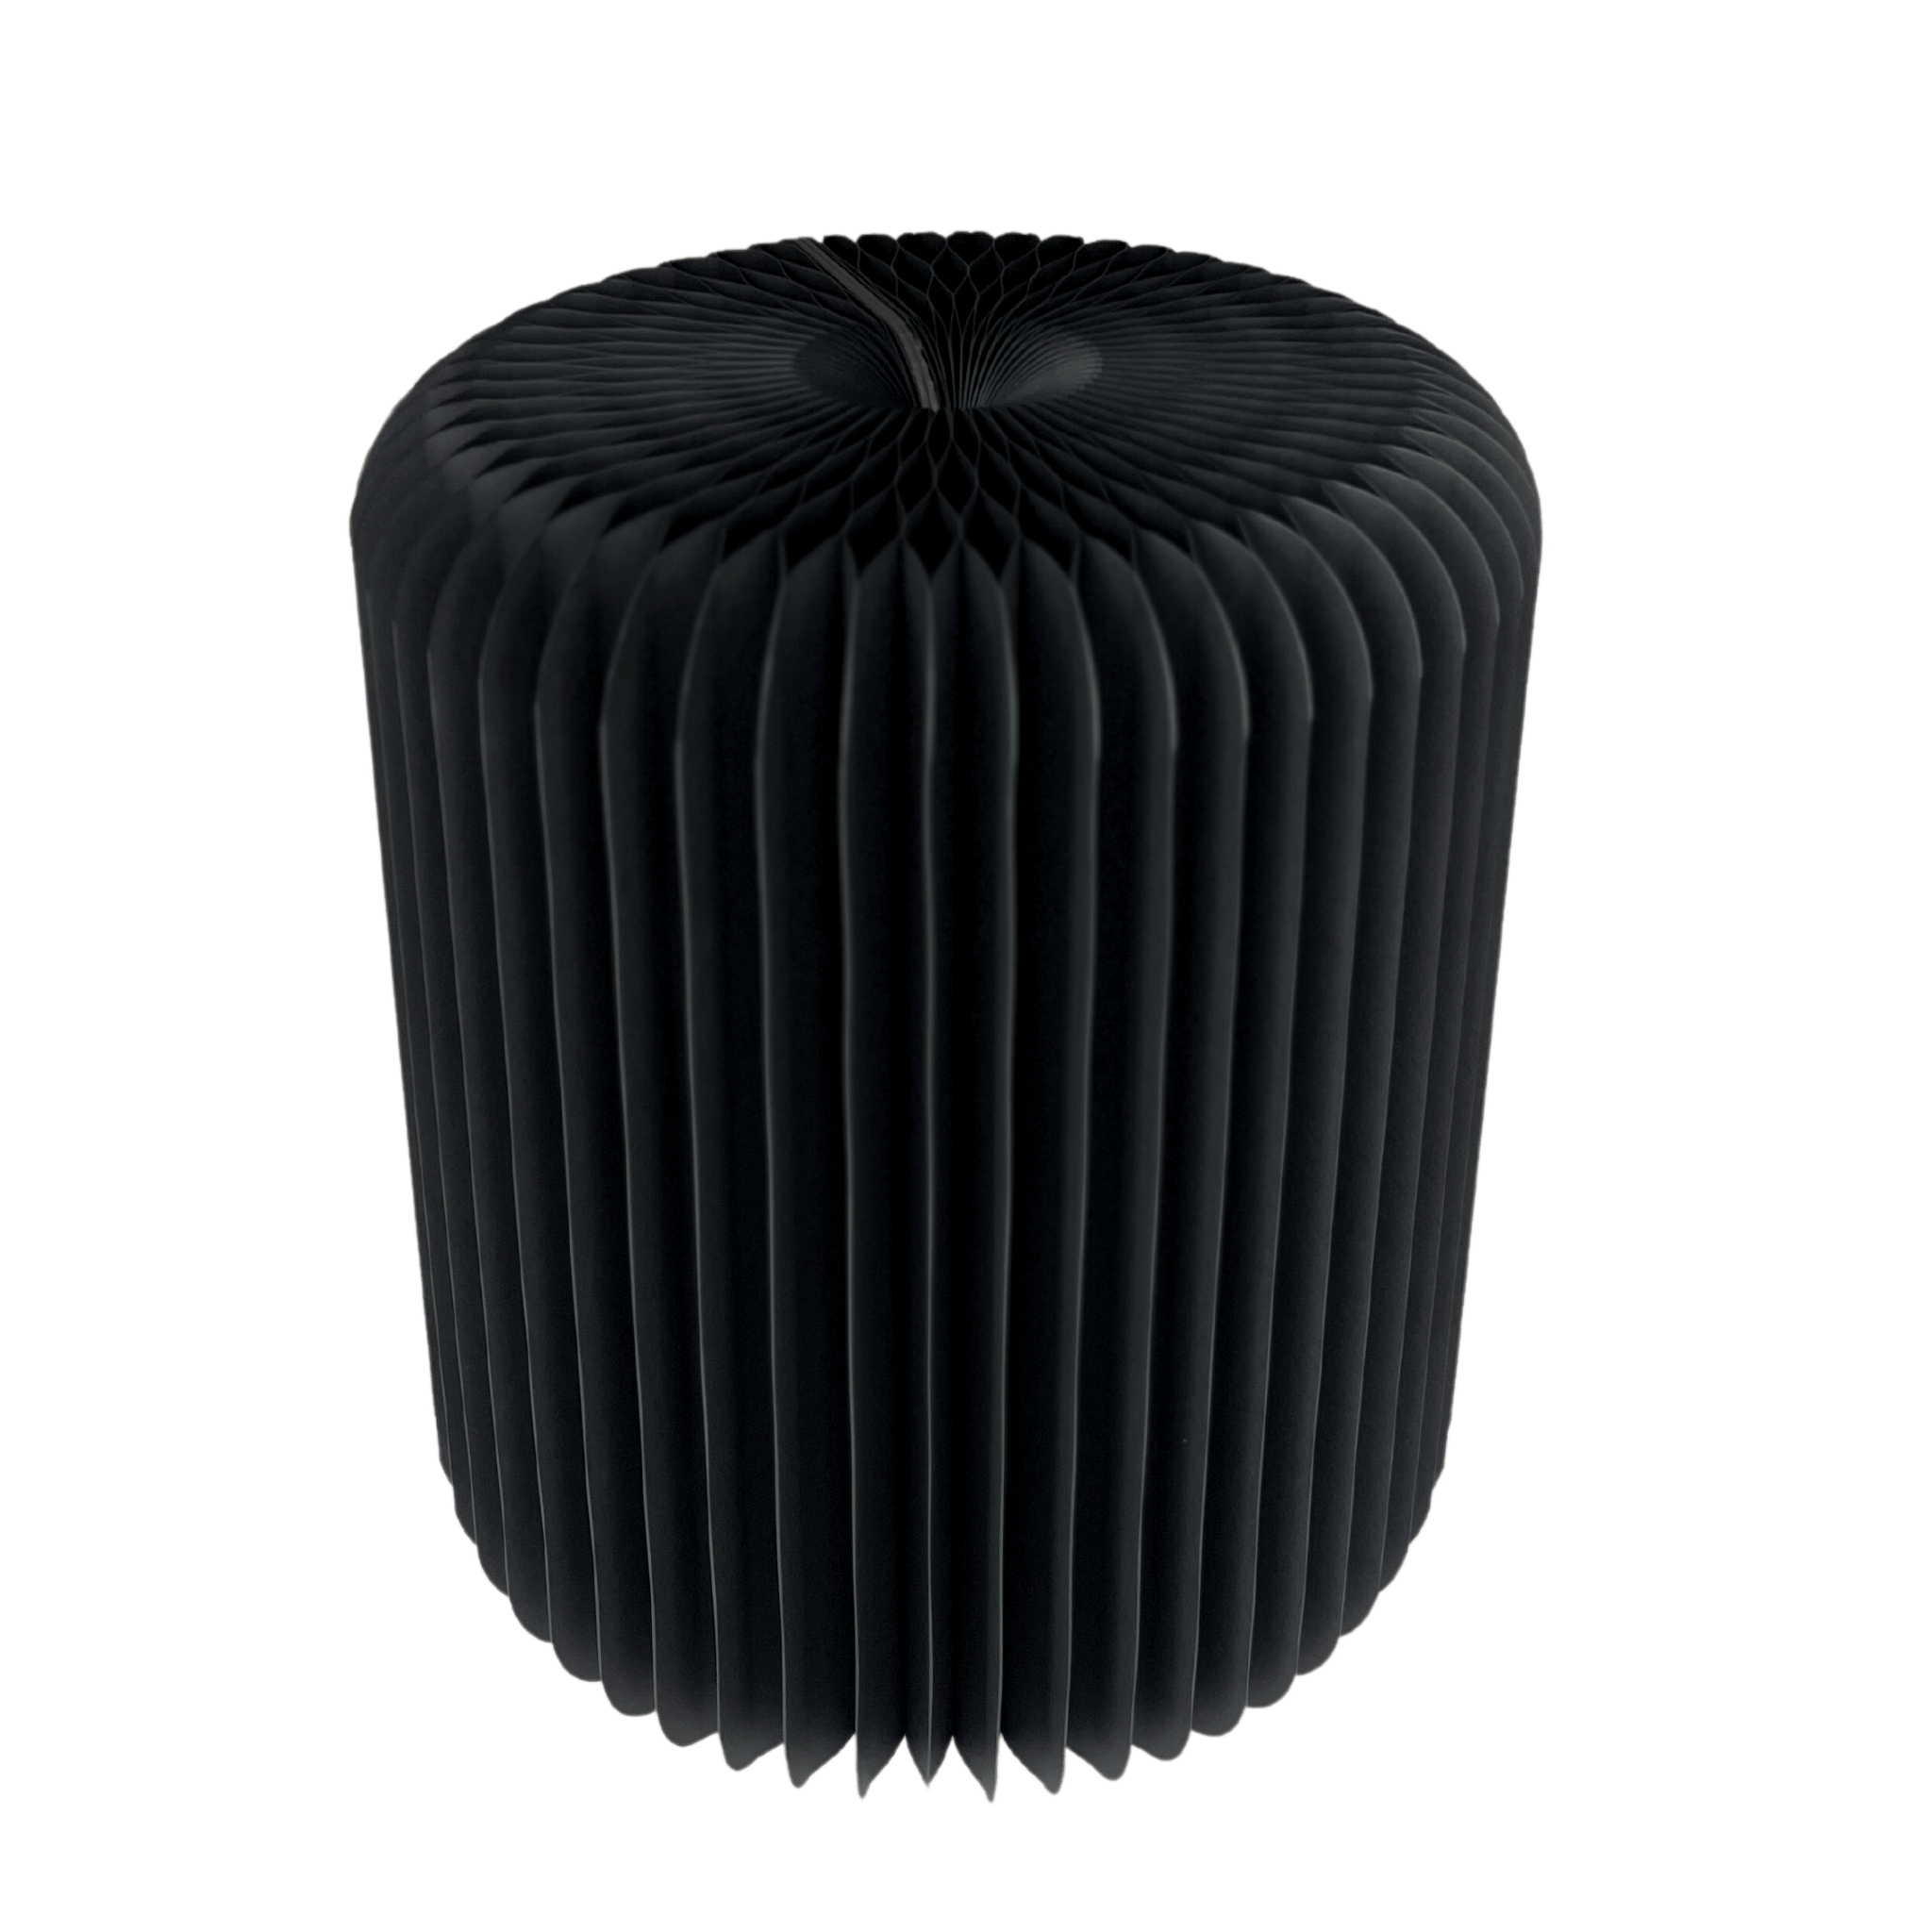 Black unfolded round stool honeycomb design eco friendly cardboard